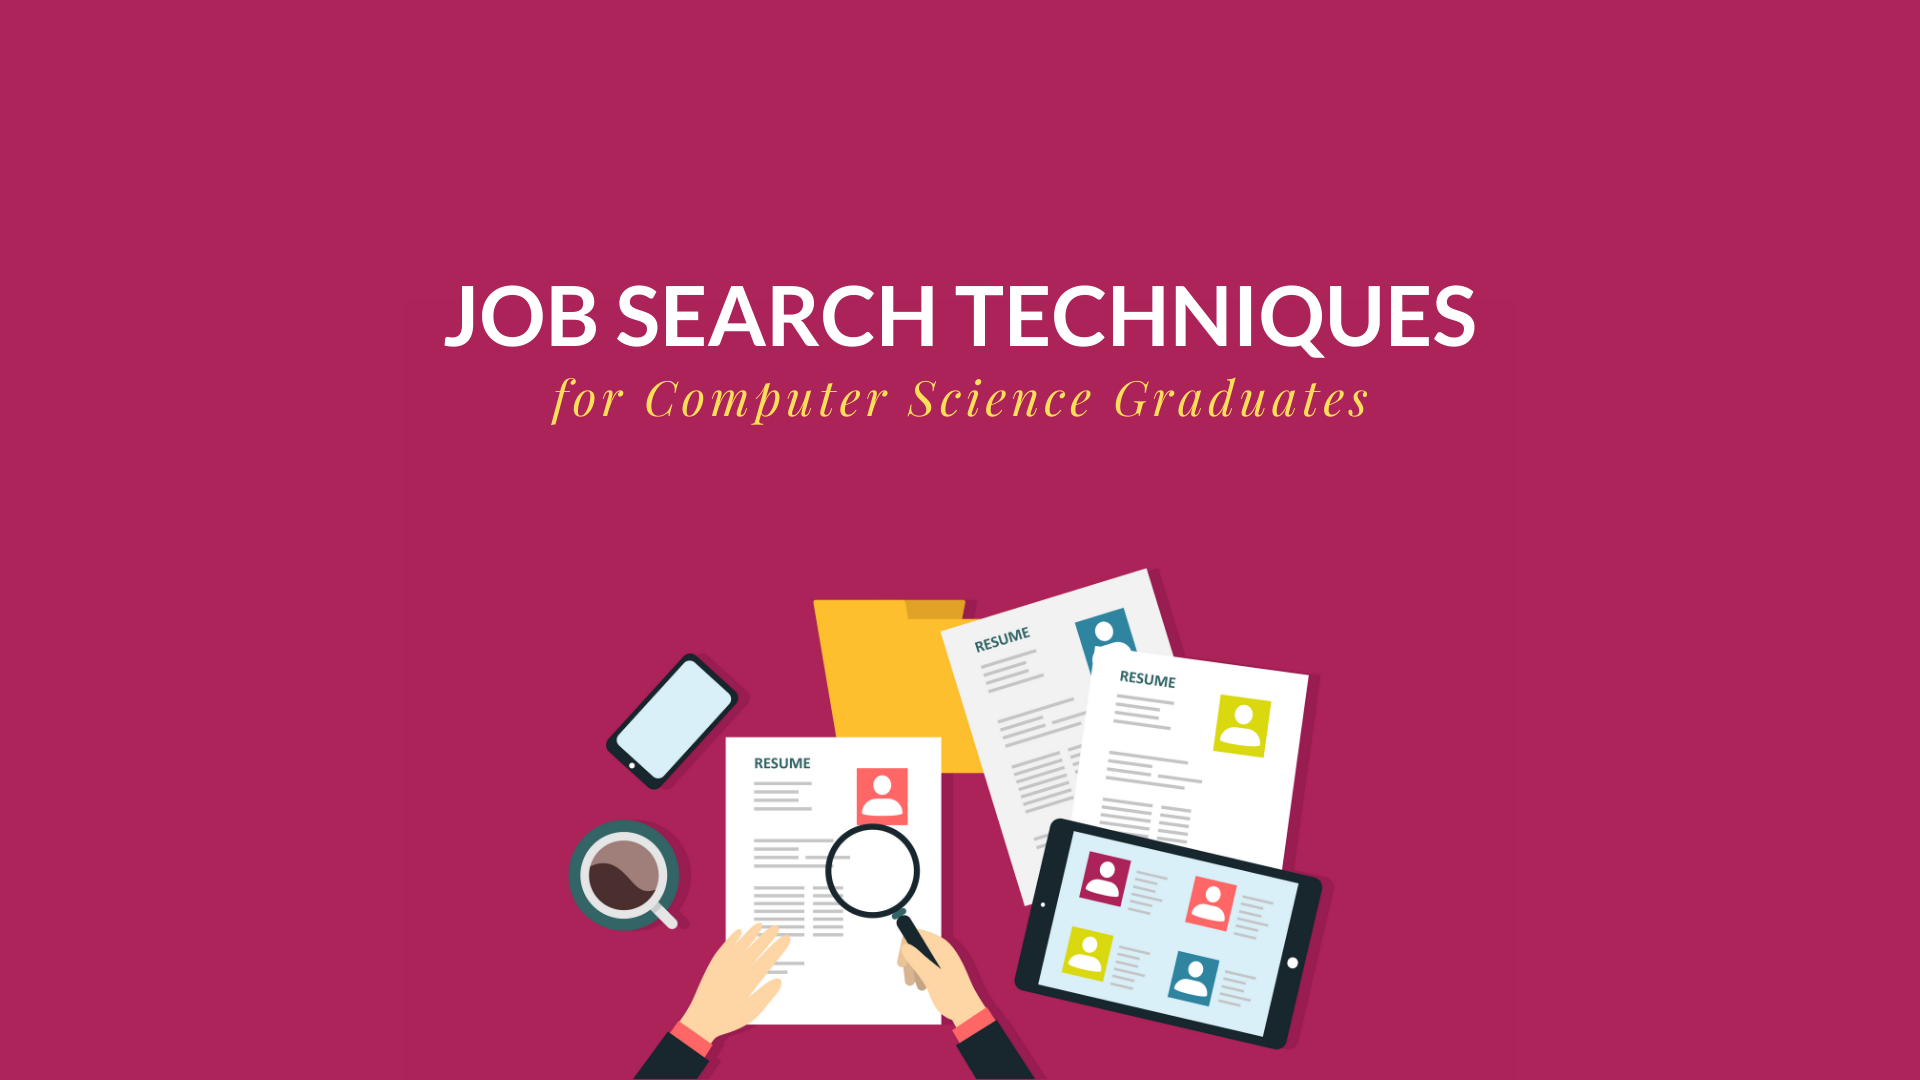 Job Search Techniques for Computer Science Graduates course image